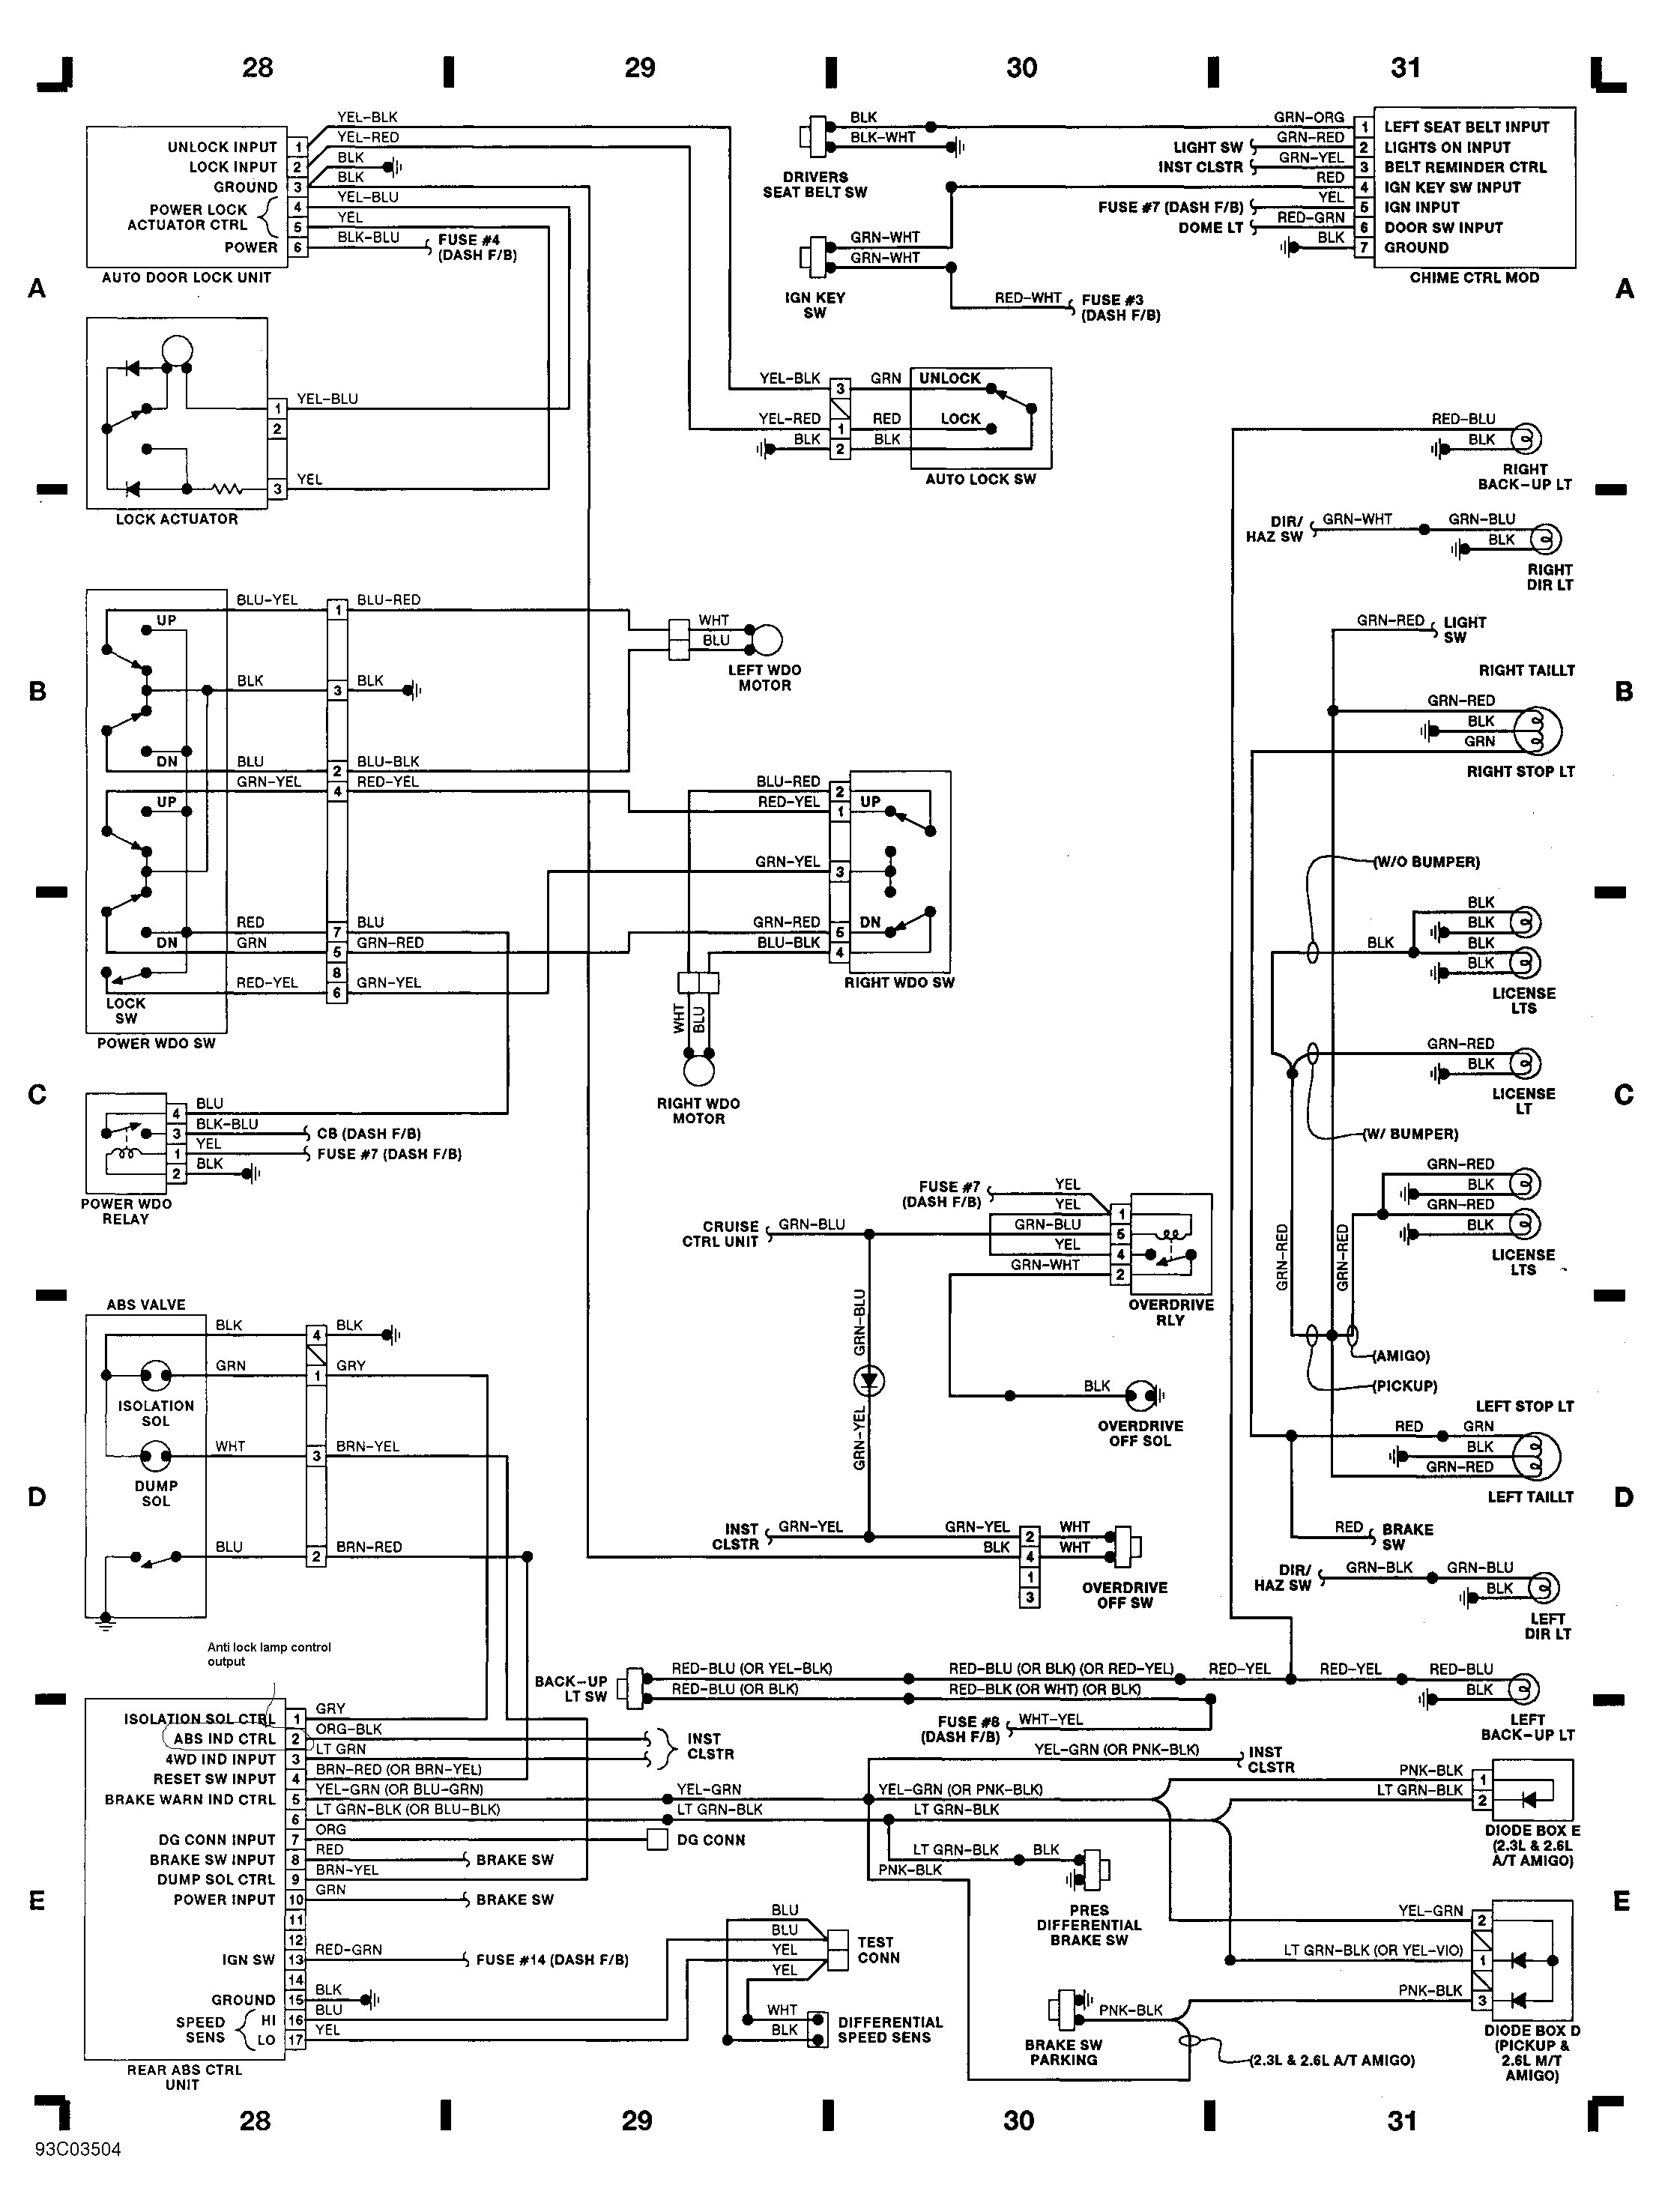 1996 Isuzu Rodeo Wiring Diagram - Wiring Diagram